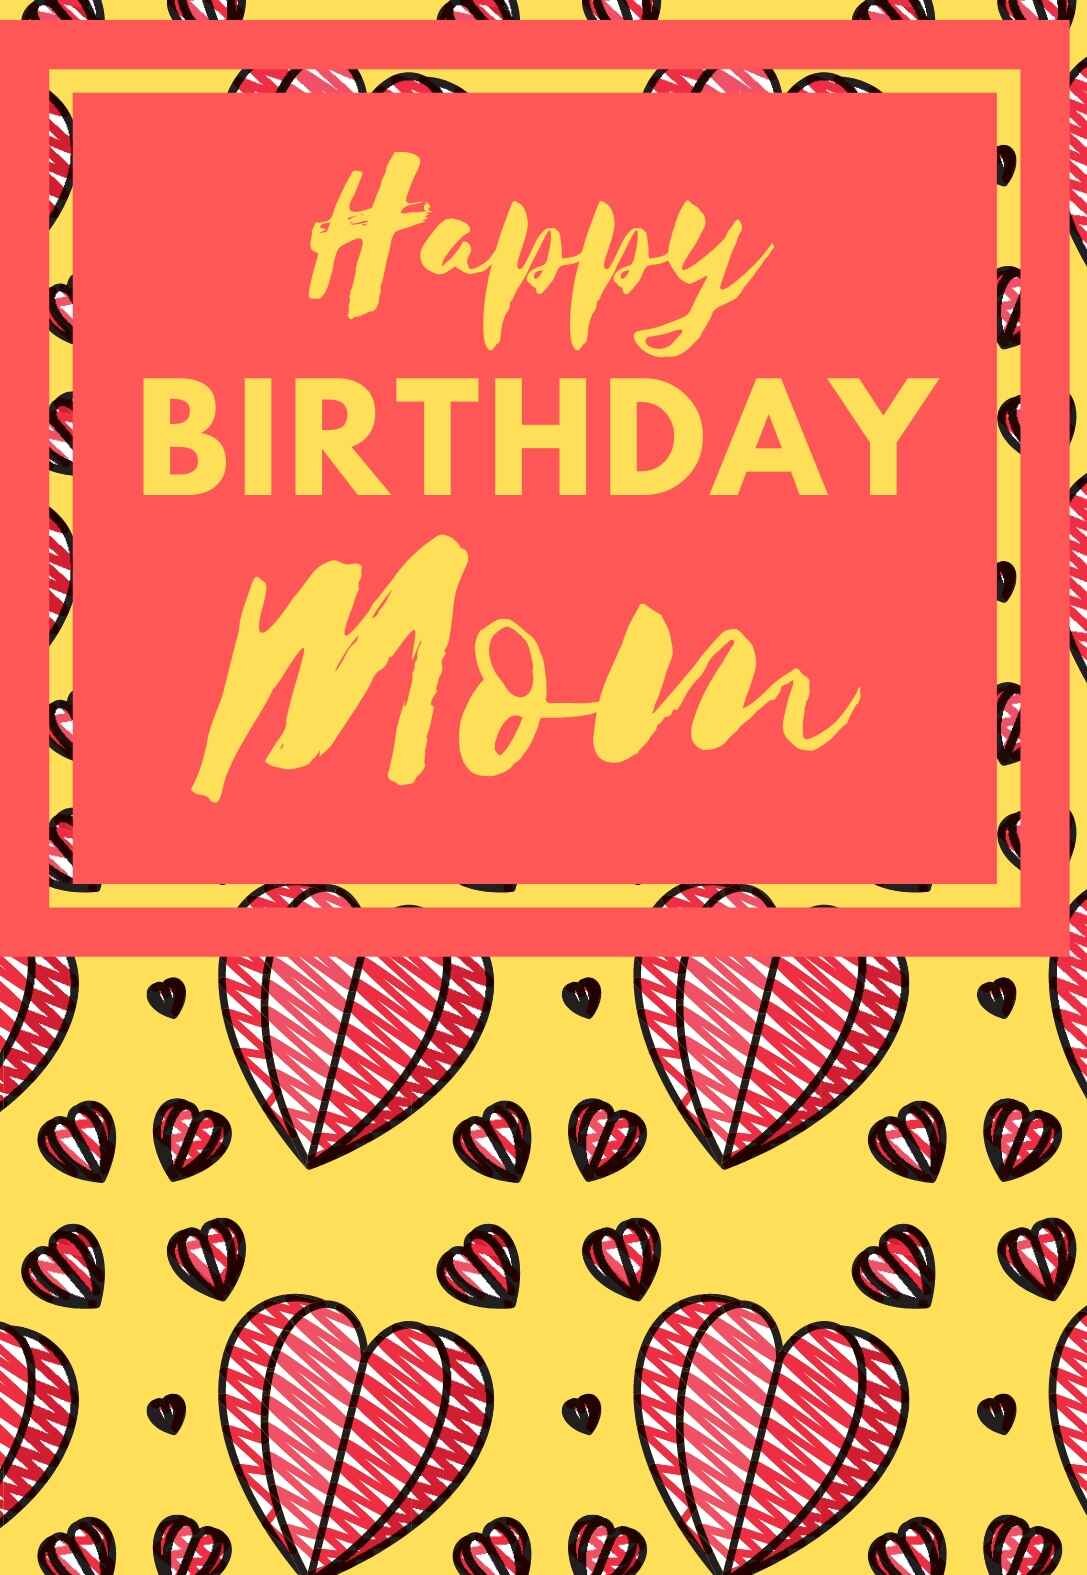 28 Awsome Printable Birthday Cards For Mom free PRINTBIRTHDAY CARDS